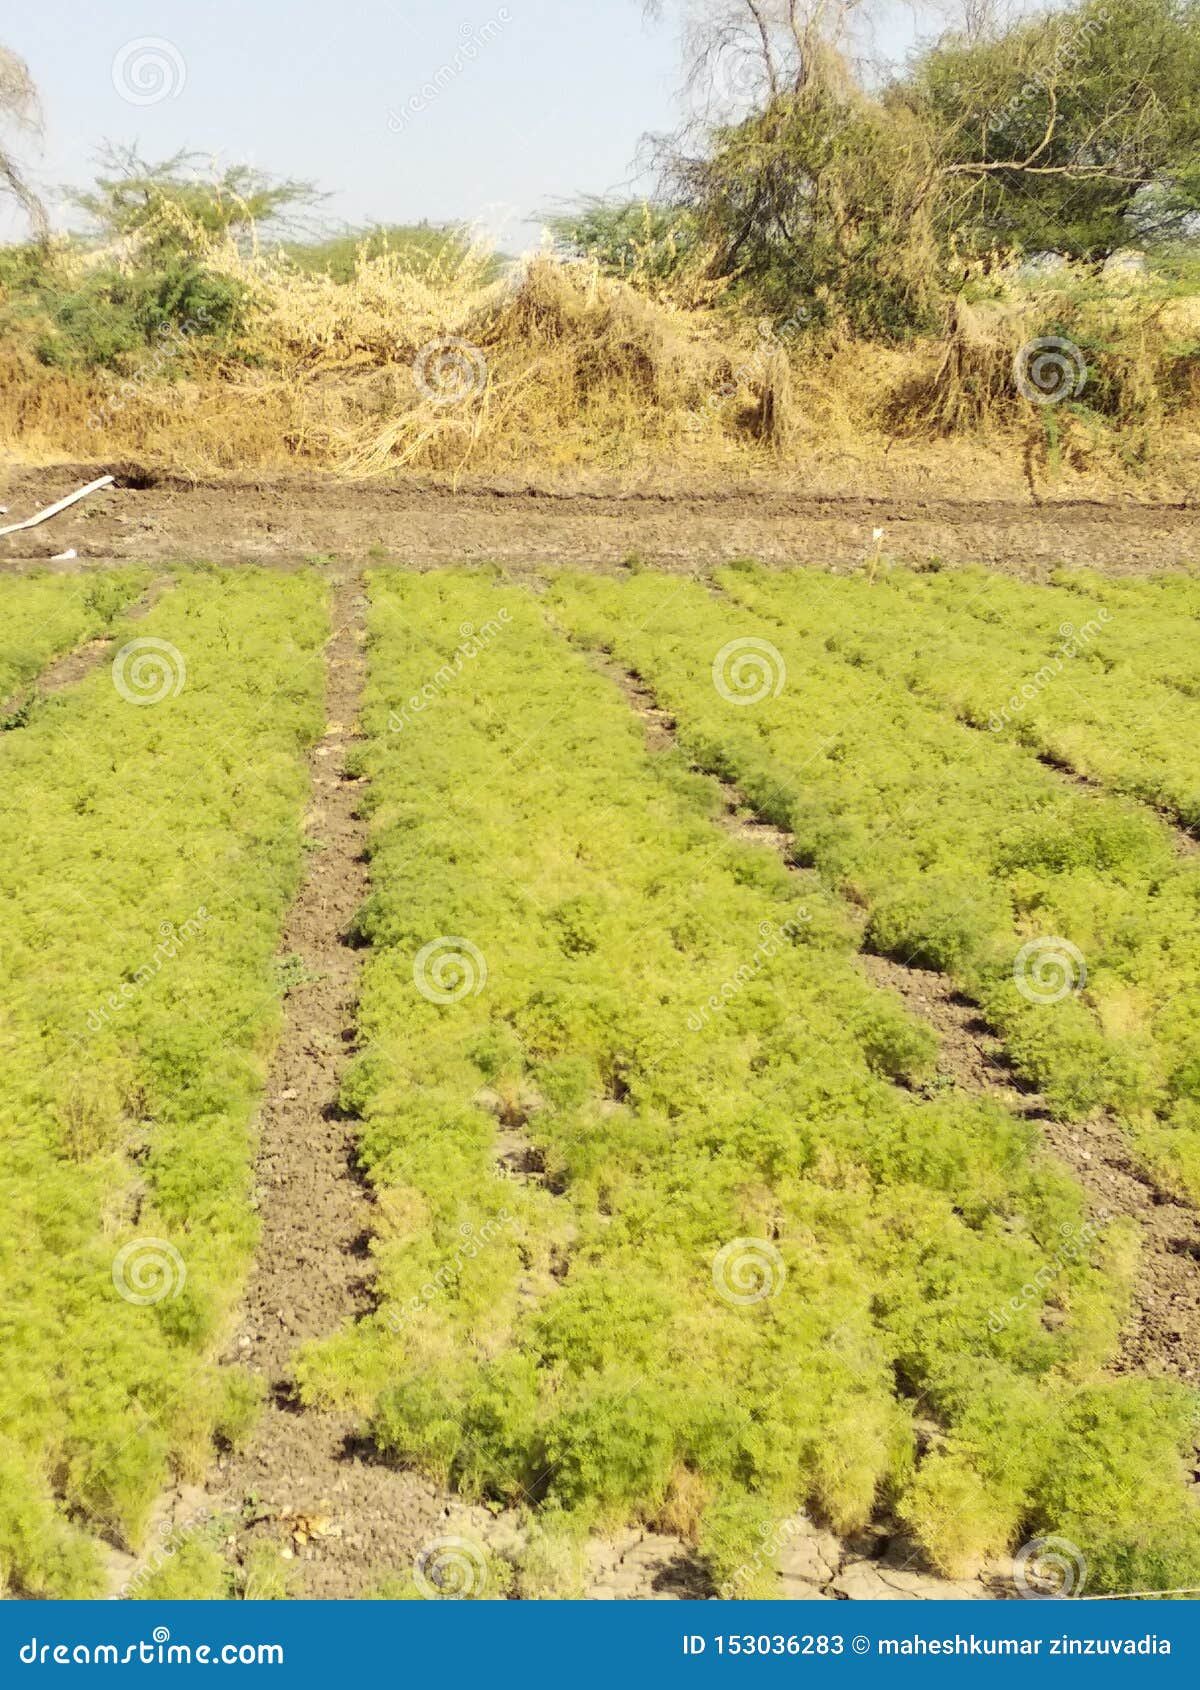 field of crope